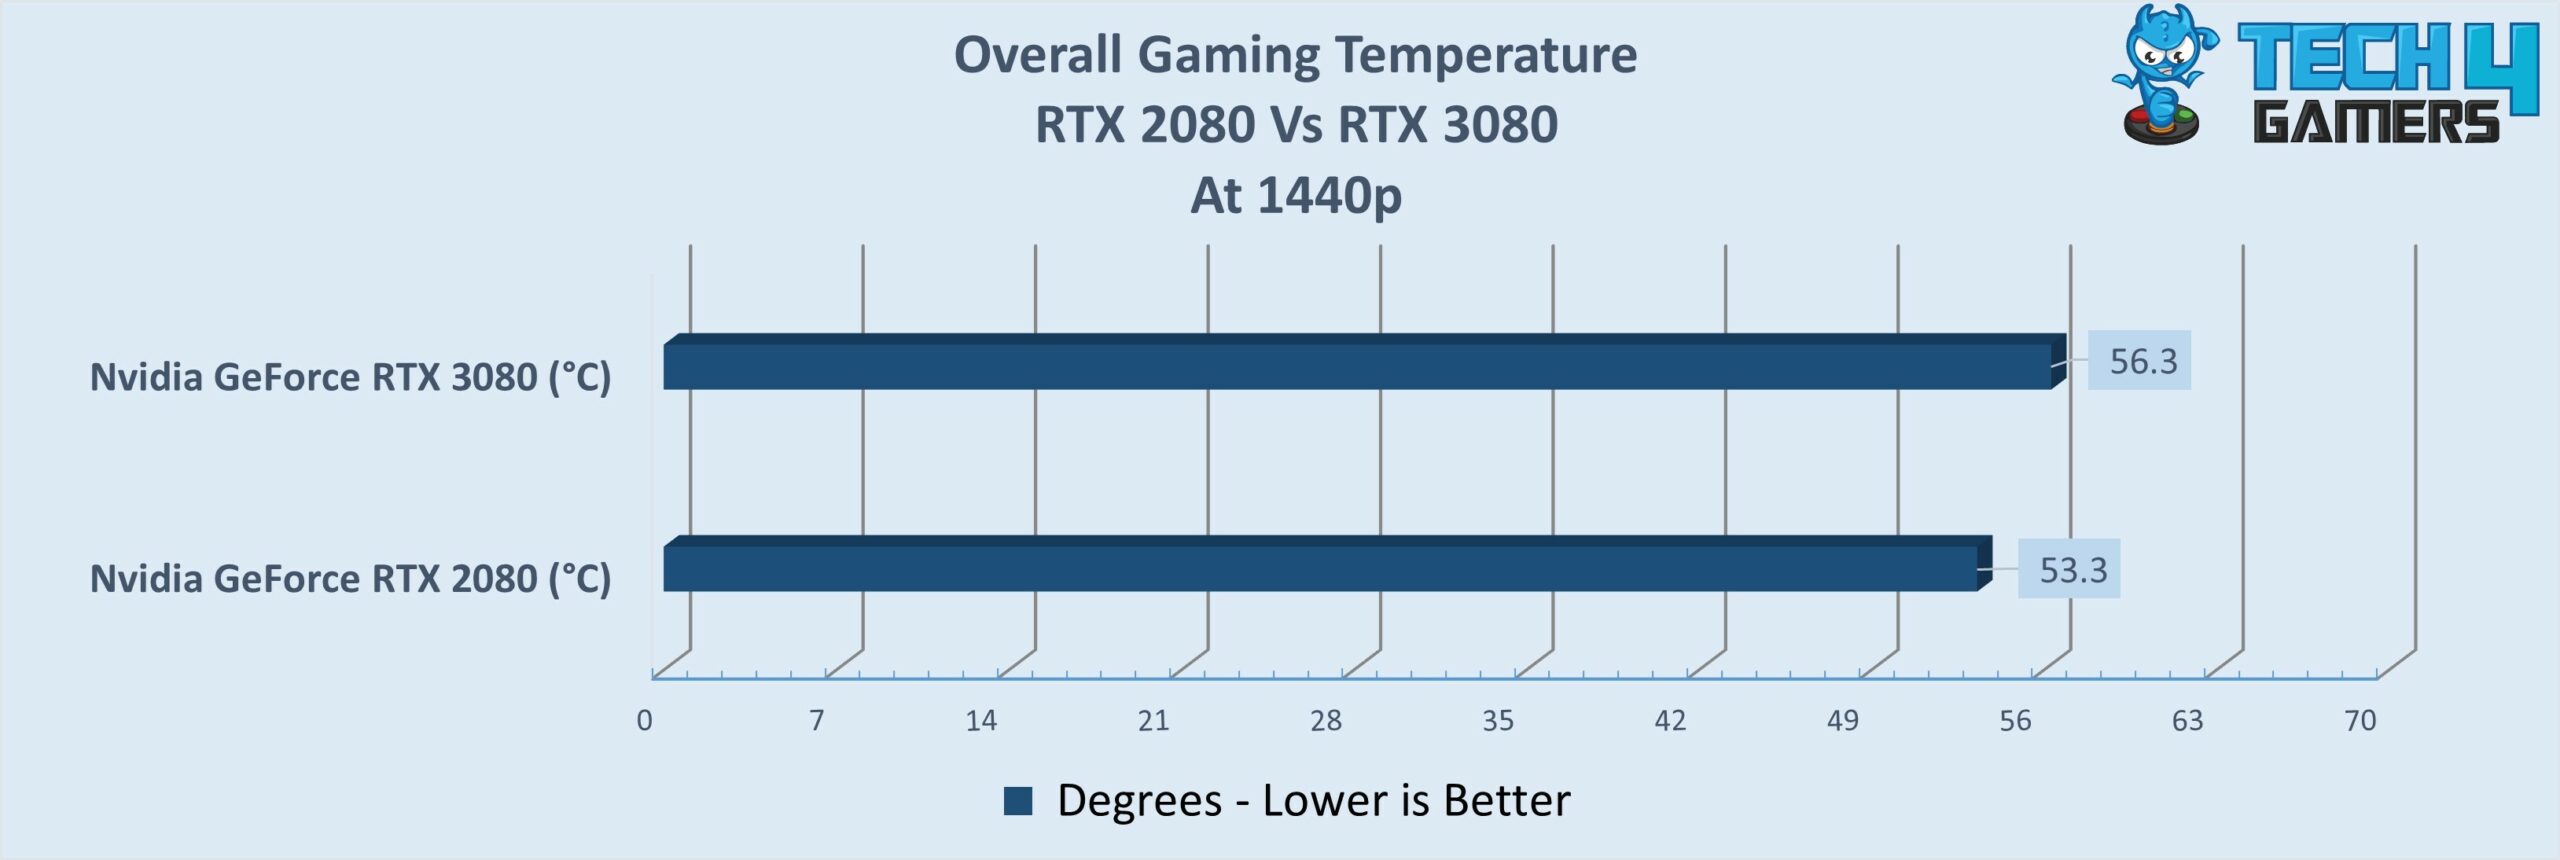 Overall Gaming Temperature of 2 GPUs